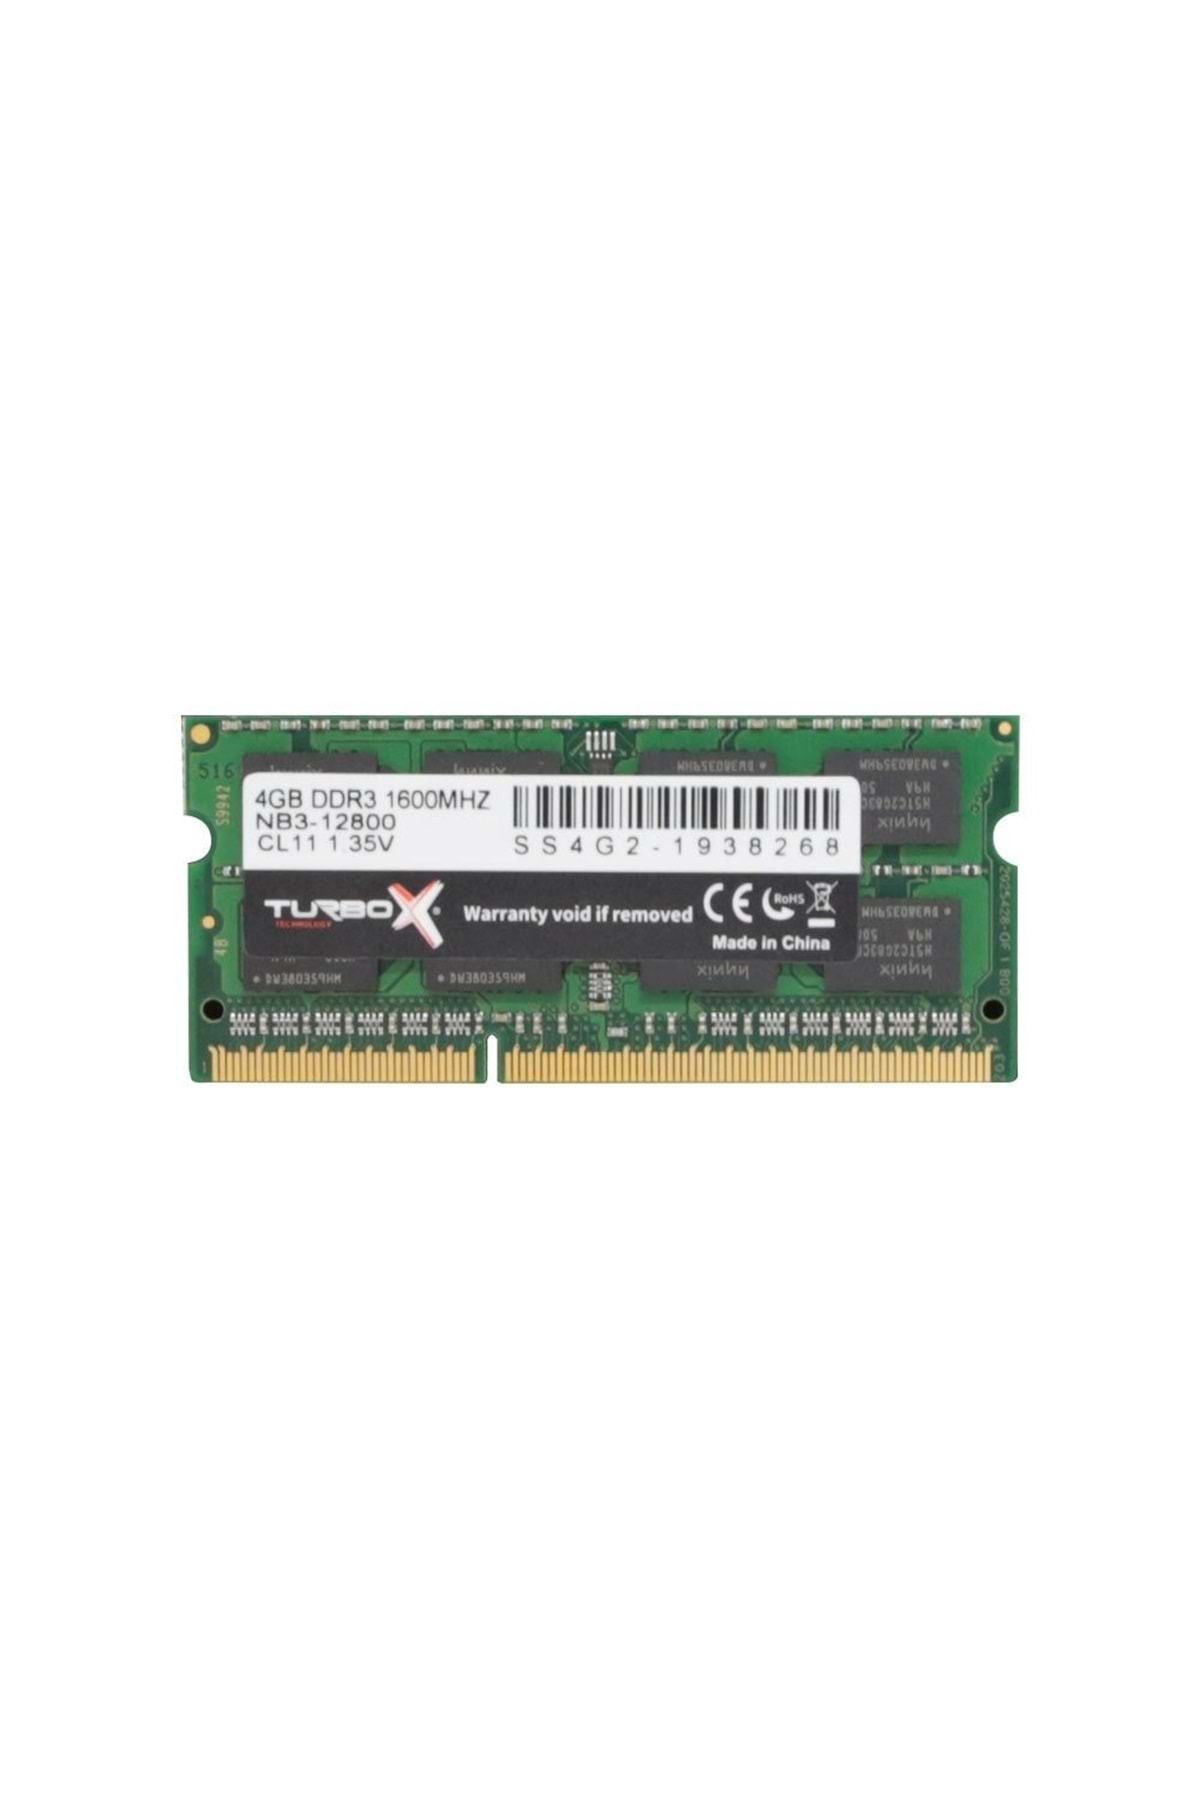 TURBOX Race Lap S 4GB DDR3 1600MHZ NB Ram